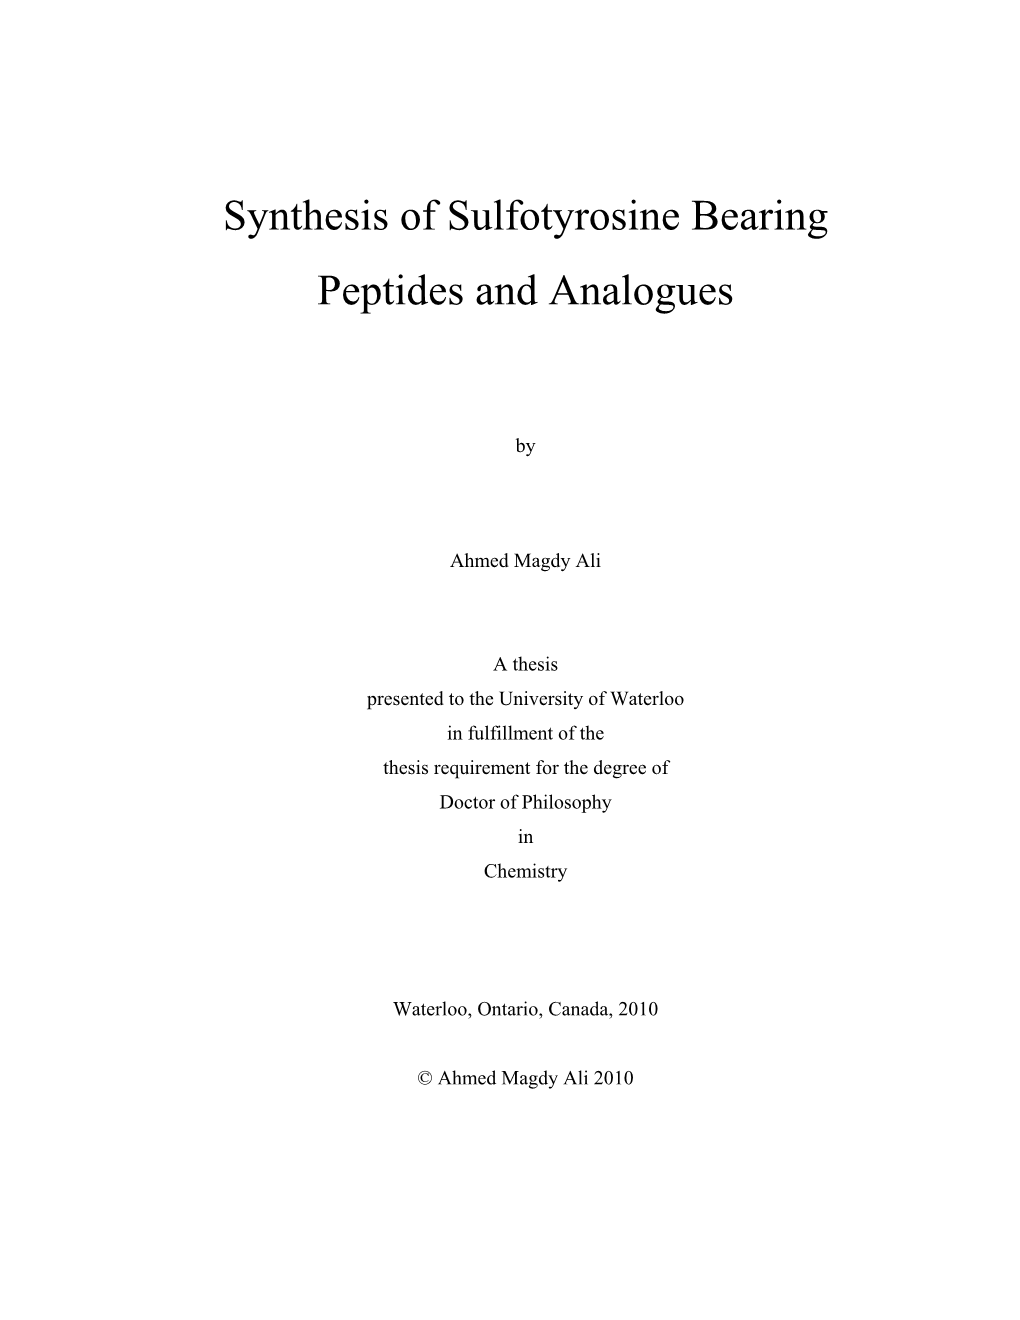 Synthesis of Sulfotyrosine Bearing Peptides and Analogues